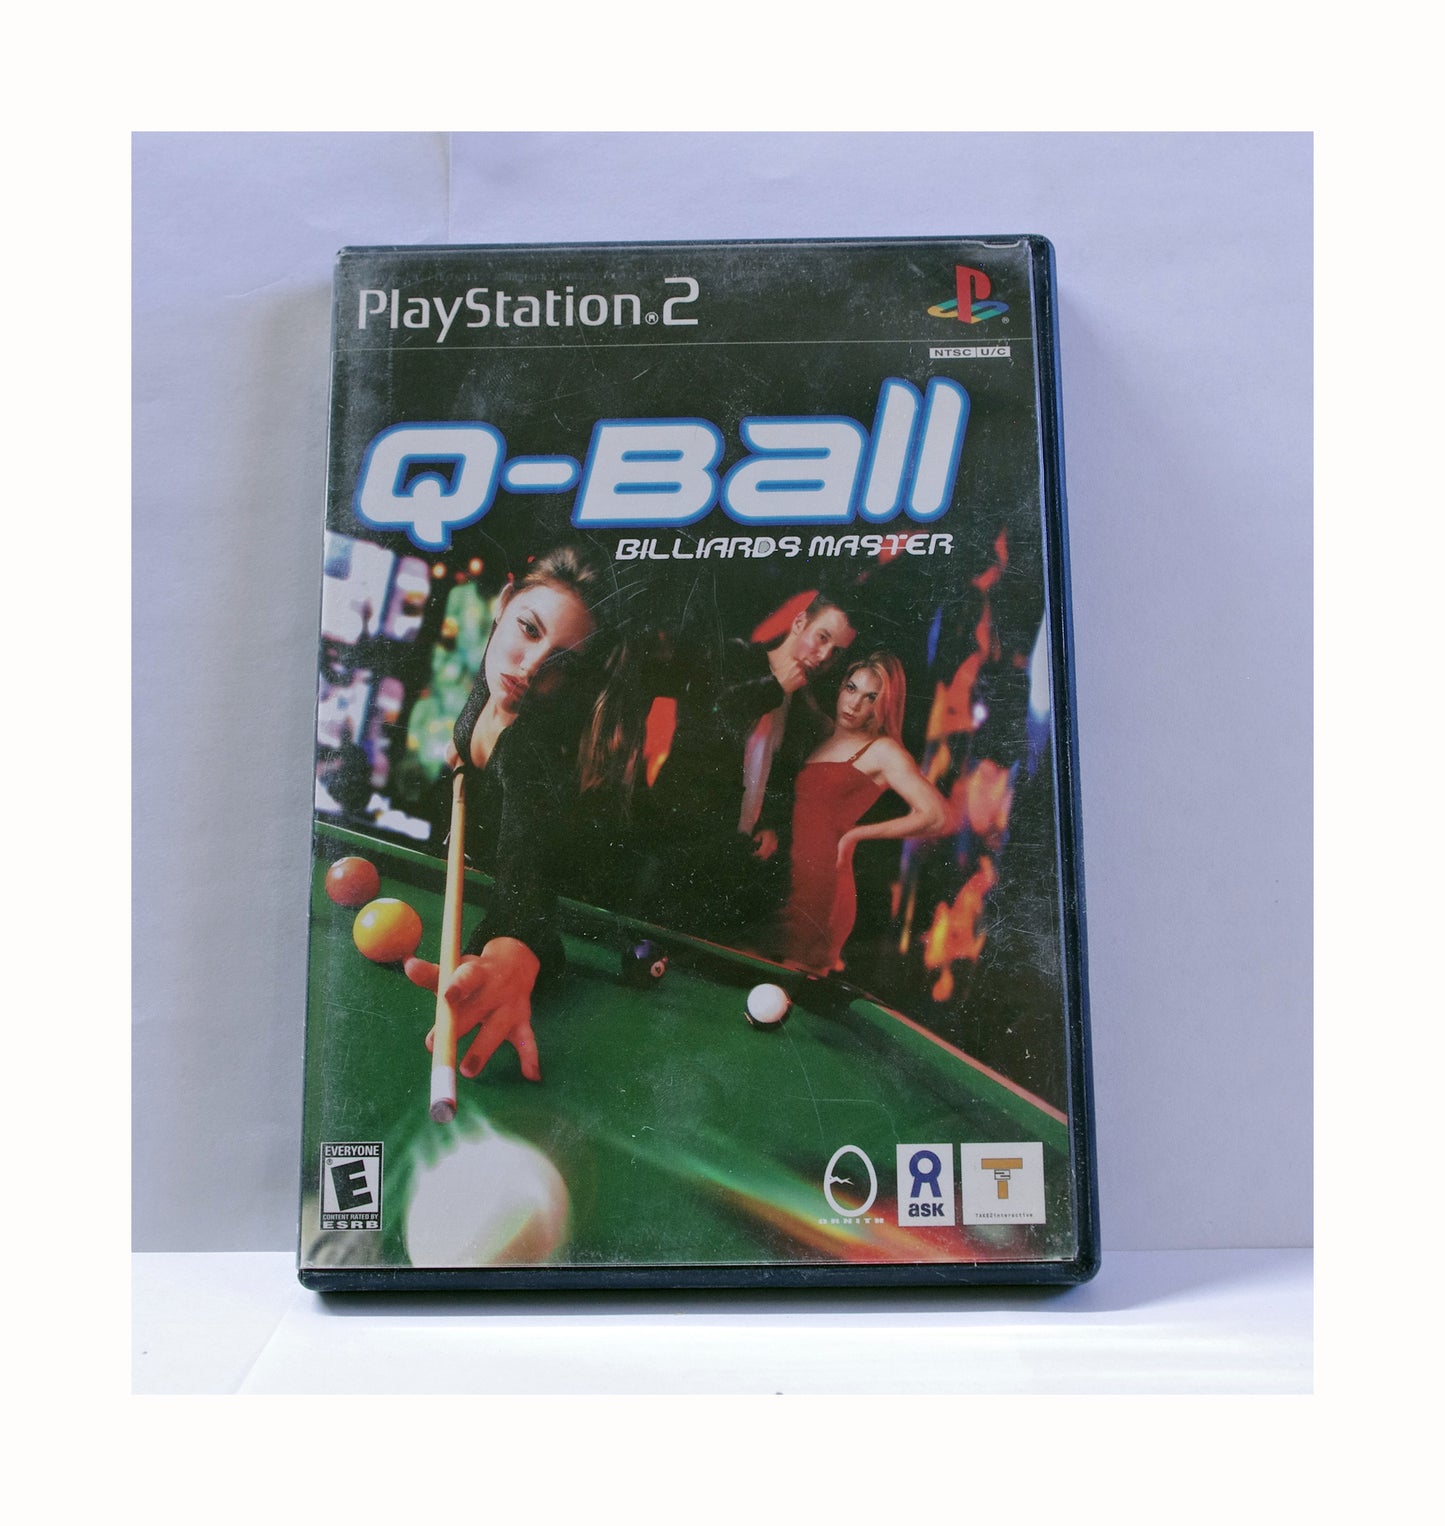 PlayStation 2 Game - Q-Ball Billiards Master